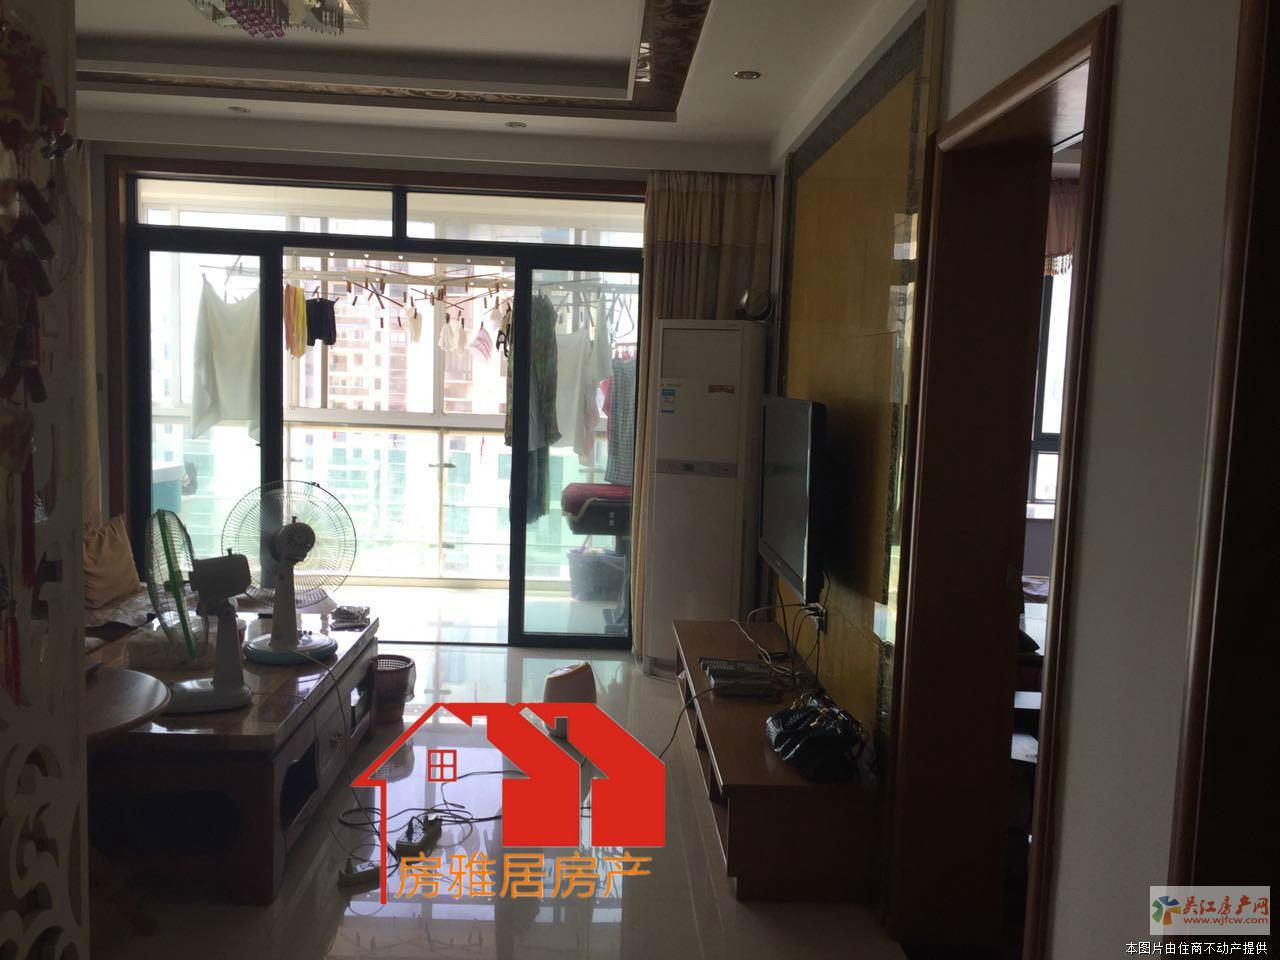 drb上海城 2室2厅1卫 92平方米 138万出售